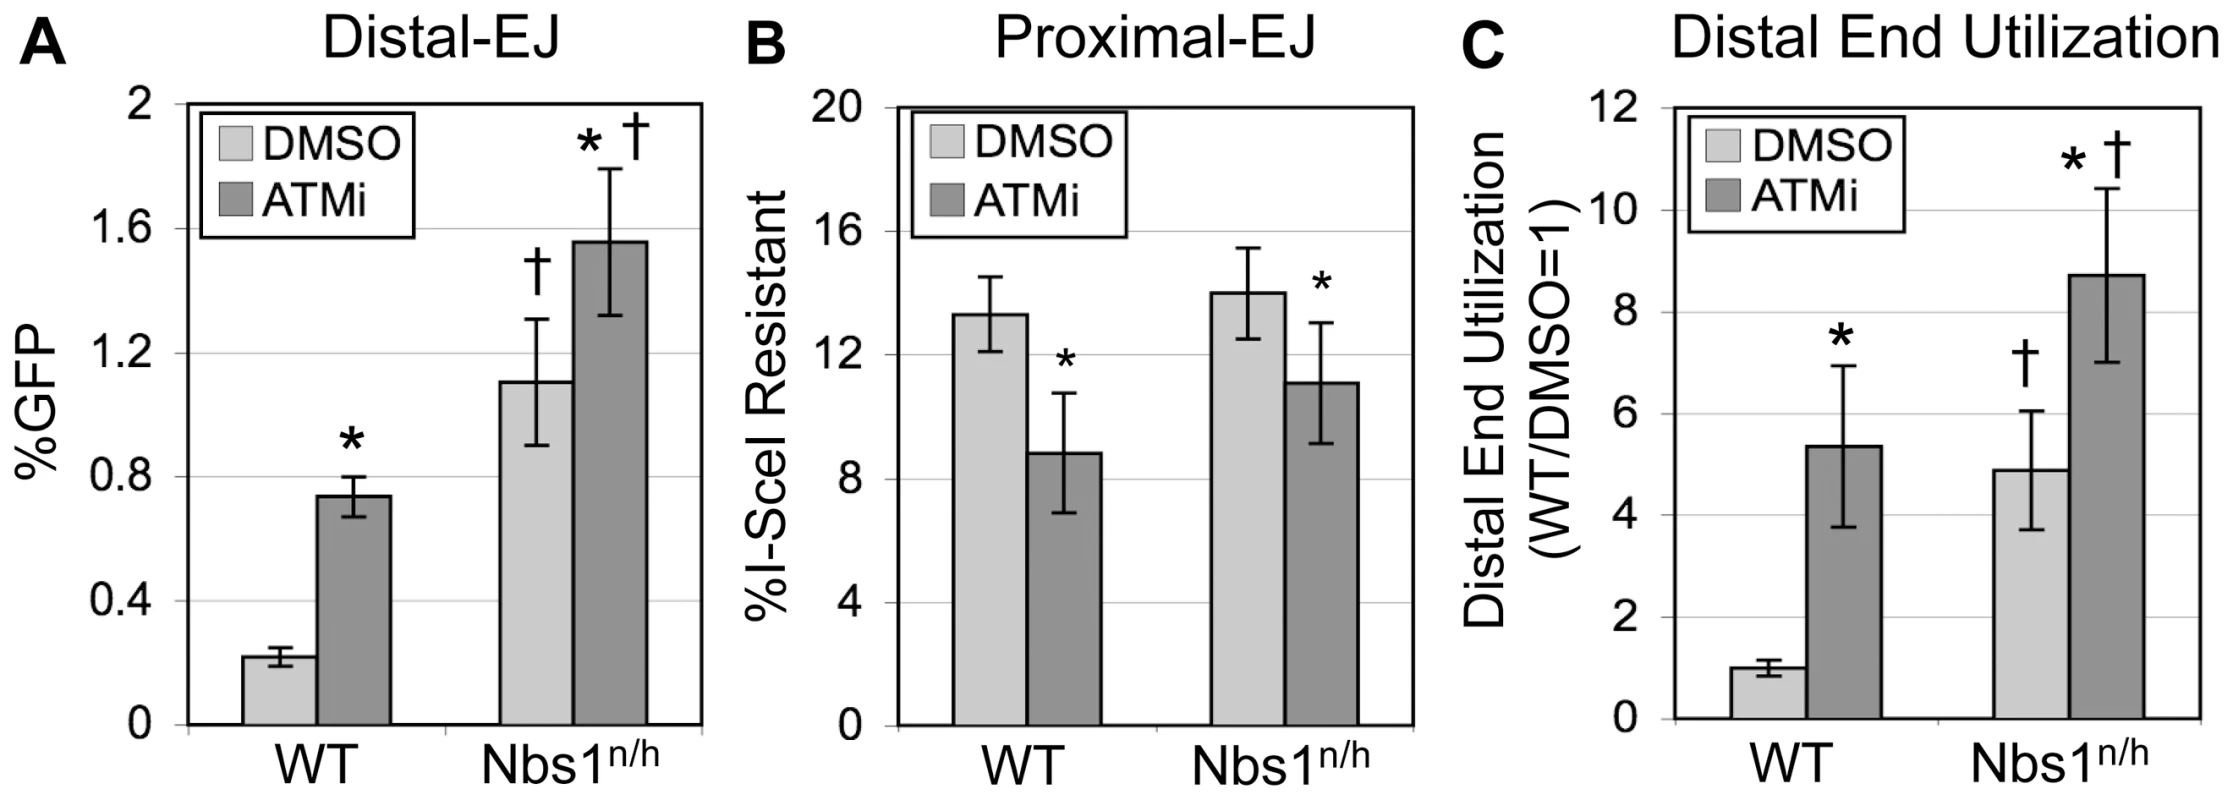 Nbs1 suppresses Distal-EJ to a similar degree as ATM.